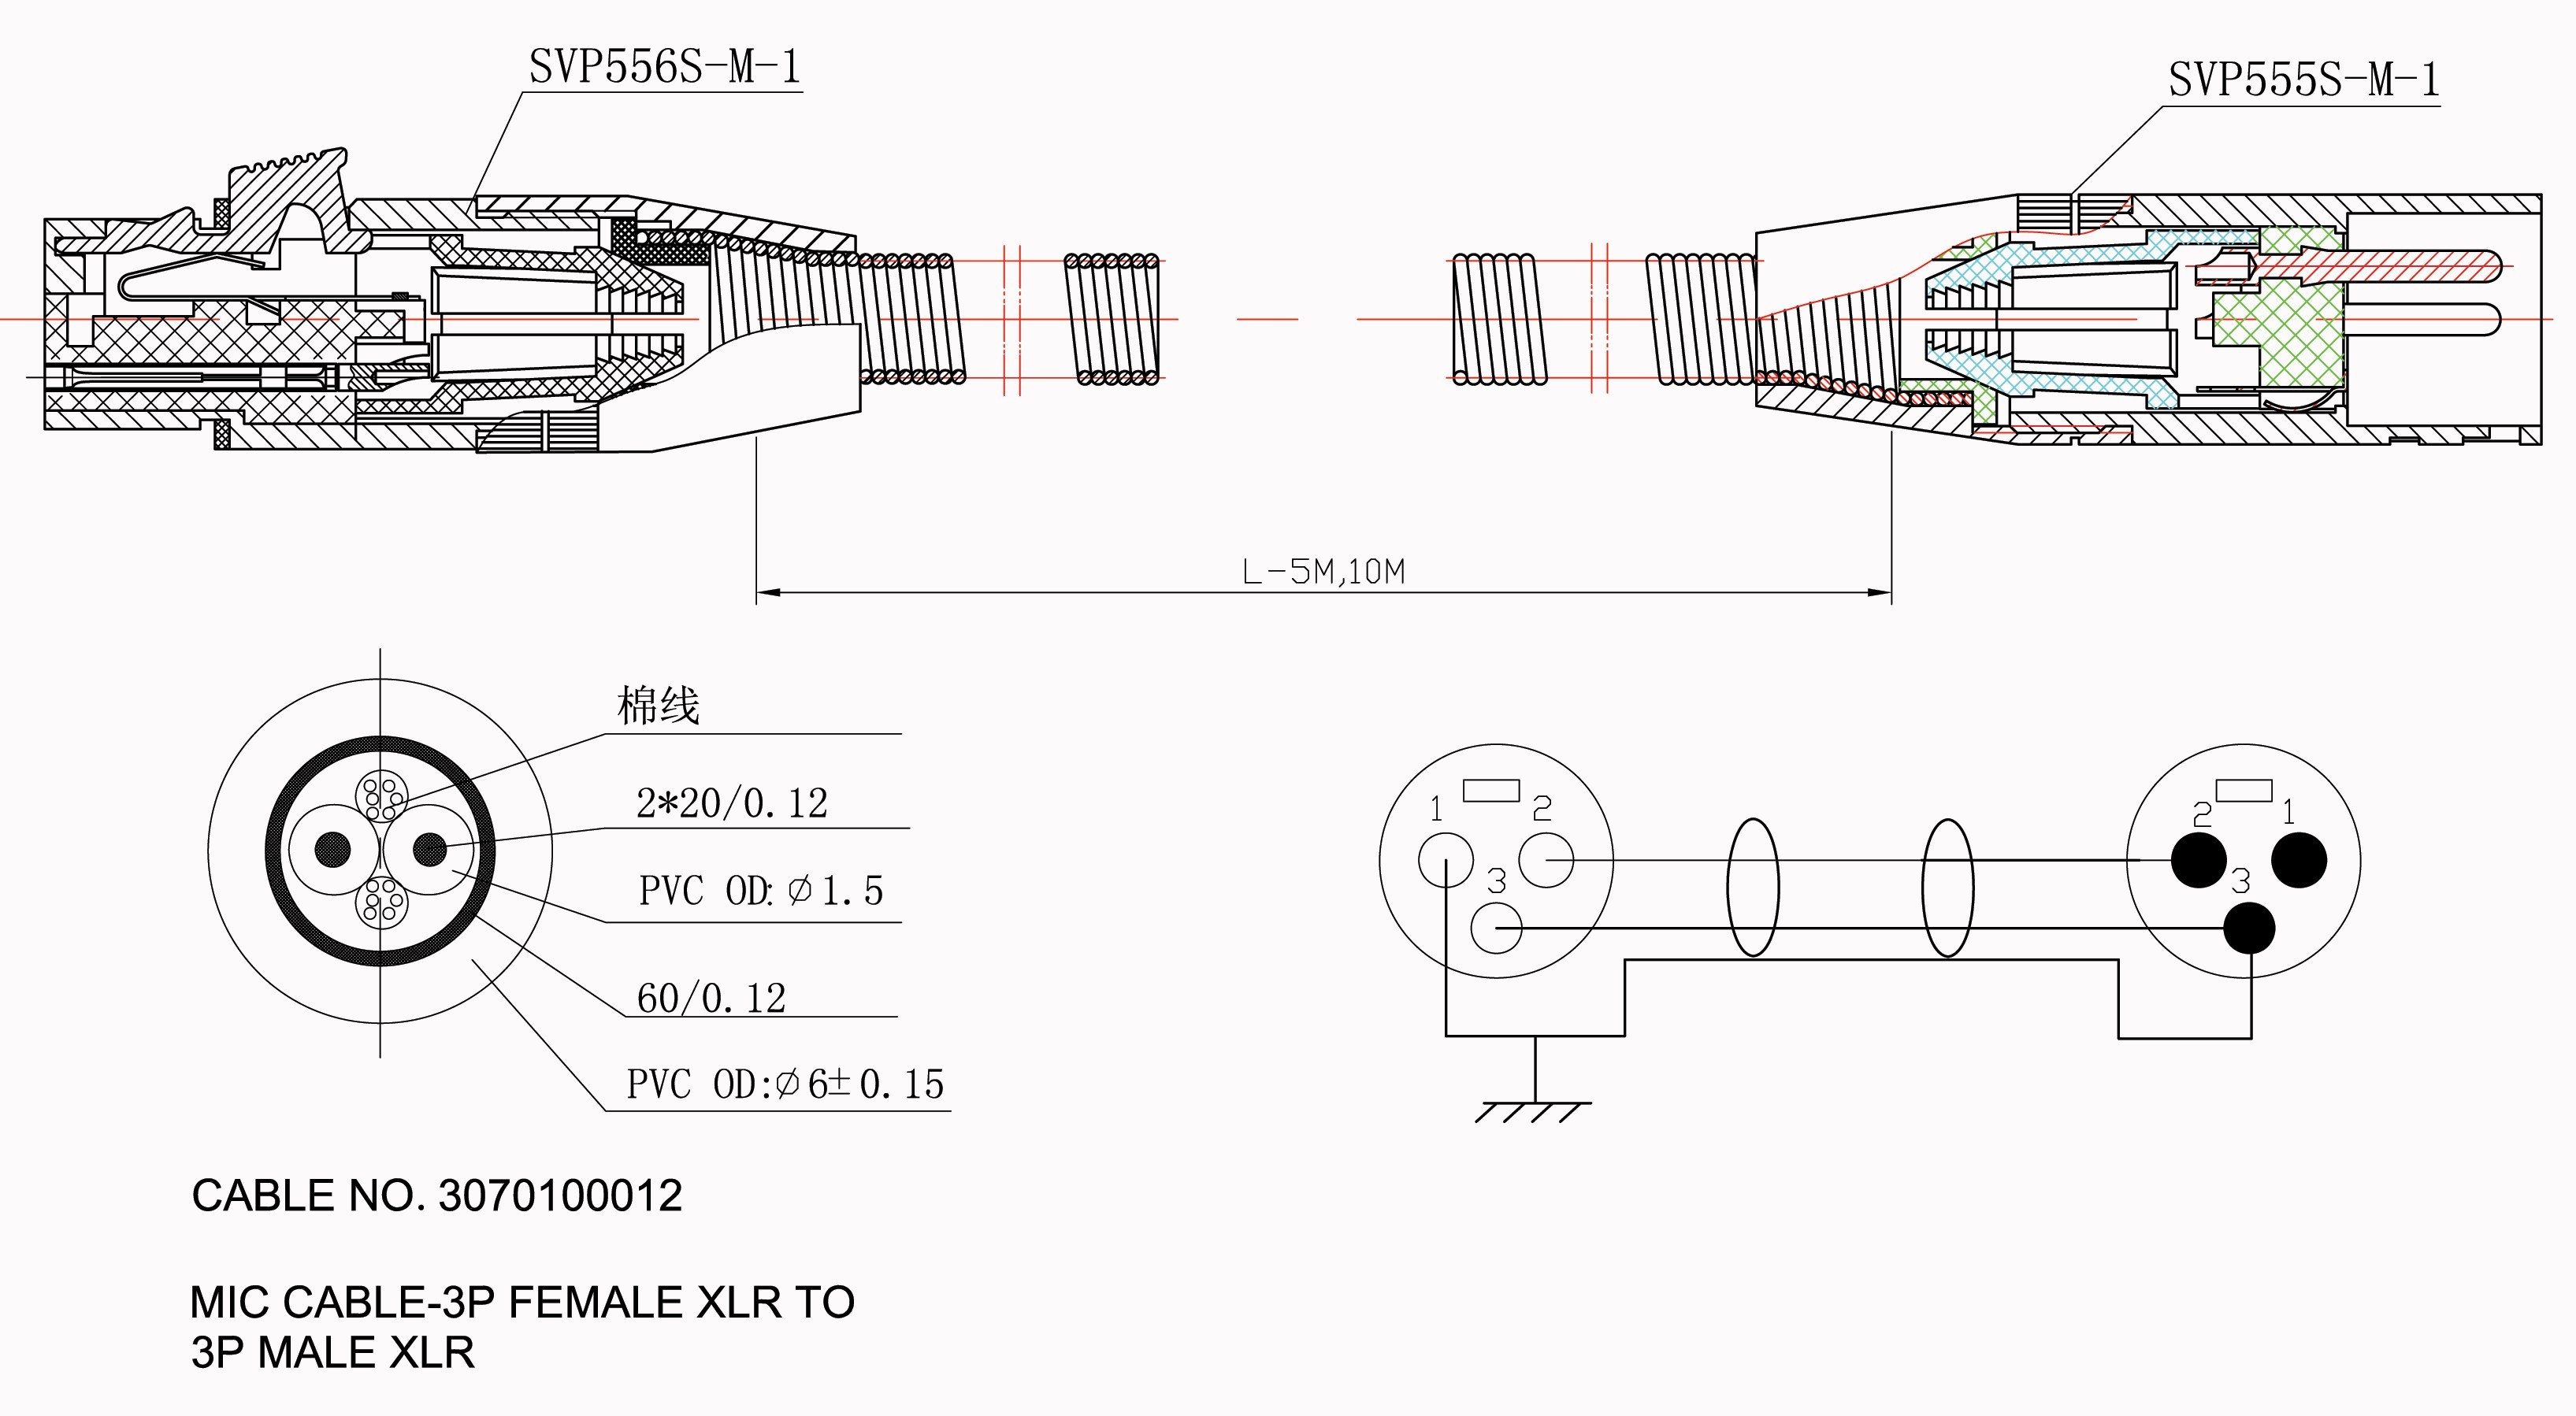 3 Pin Dmx Cable Wiring Diagram natebird